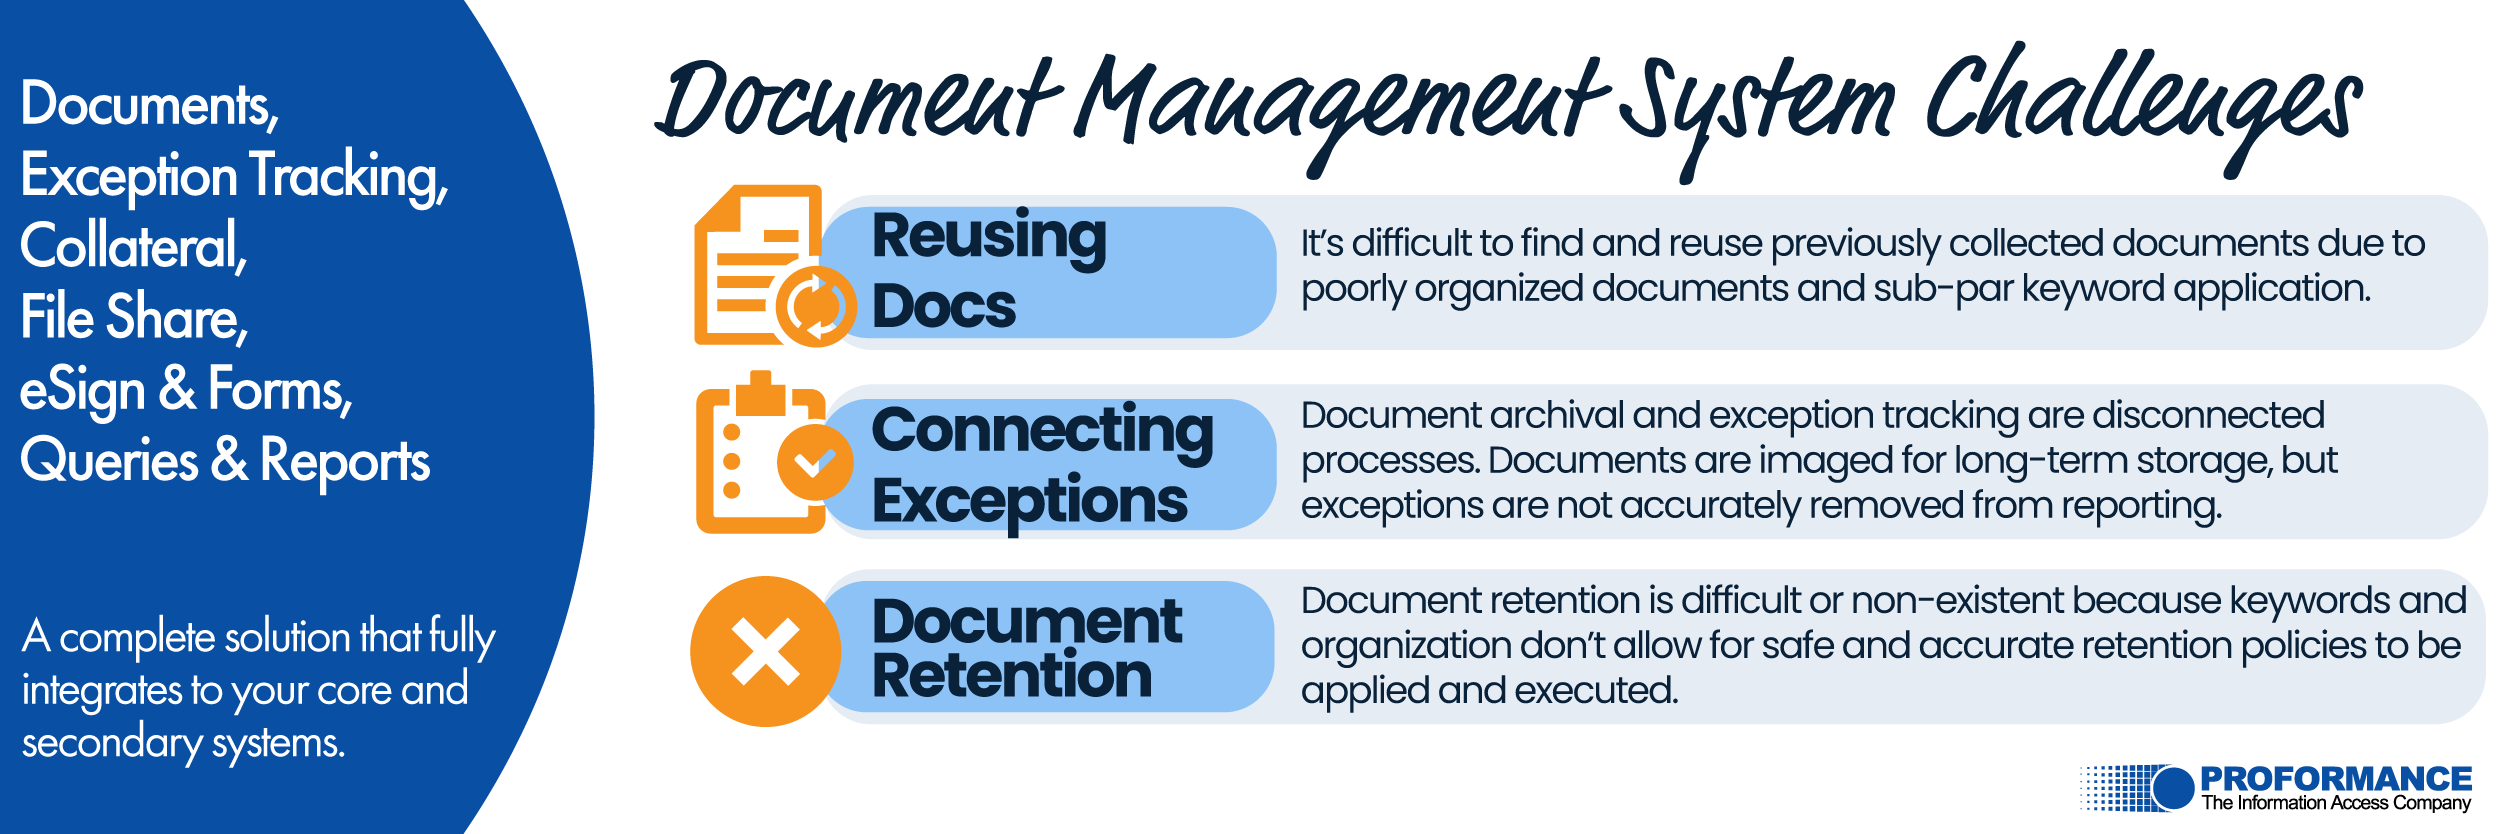 document management system challenges-01